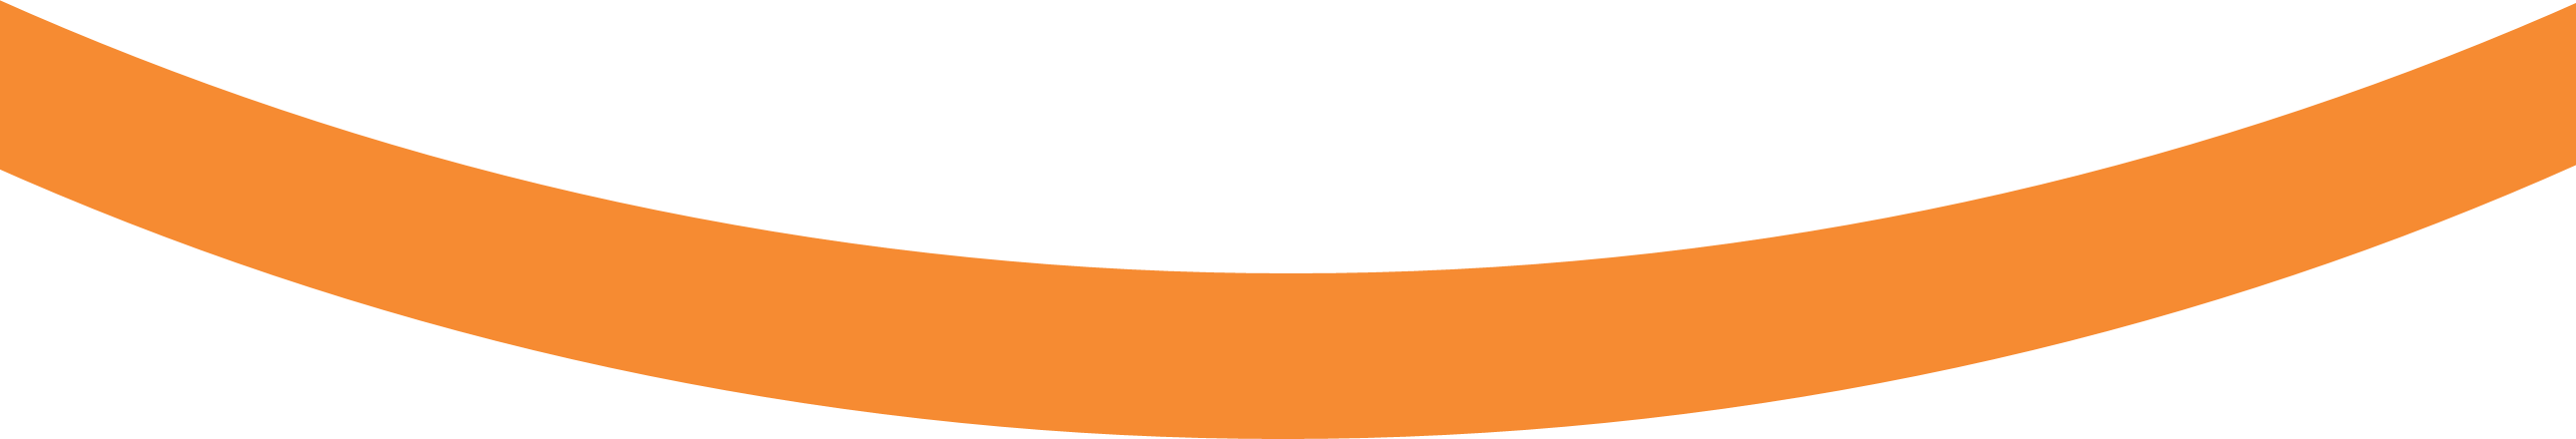 Orange Abstract Lines Transparent Image - Orange Curved Line Png (2580x440)